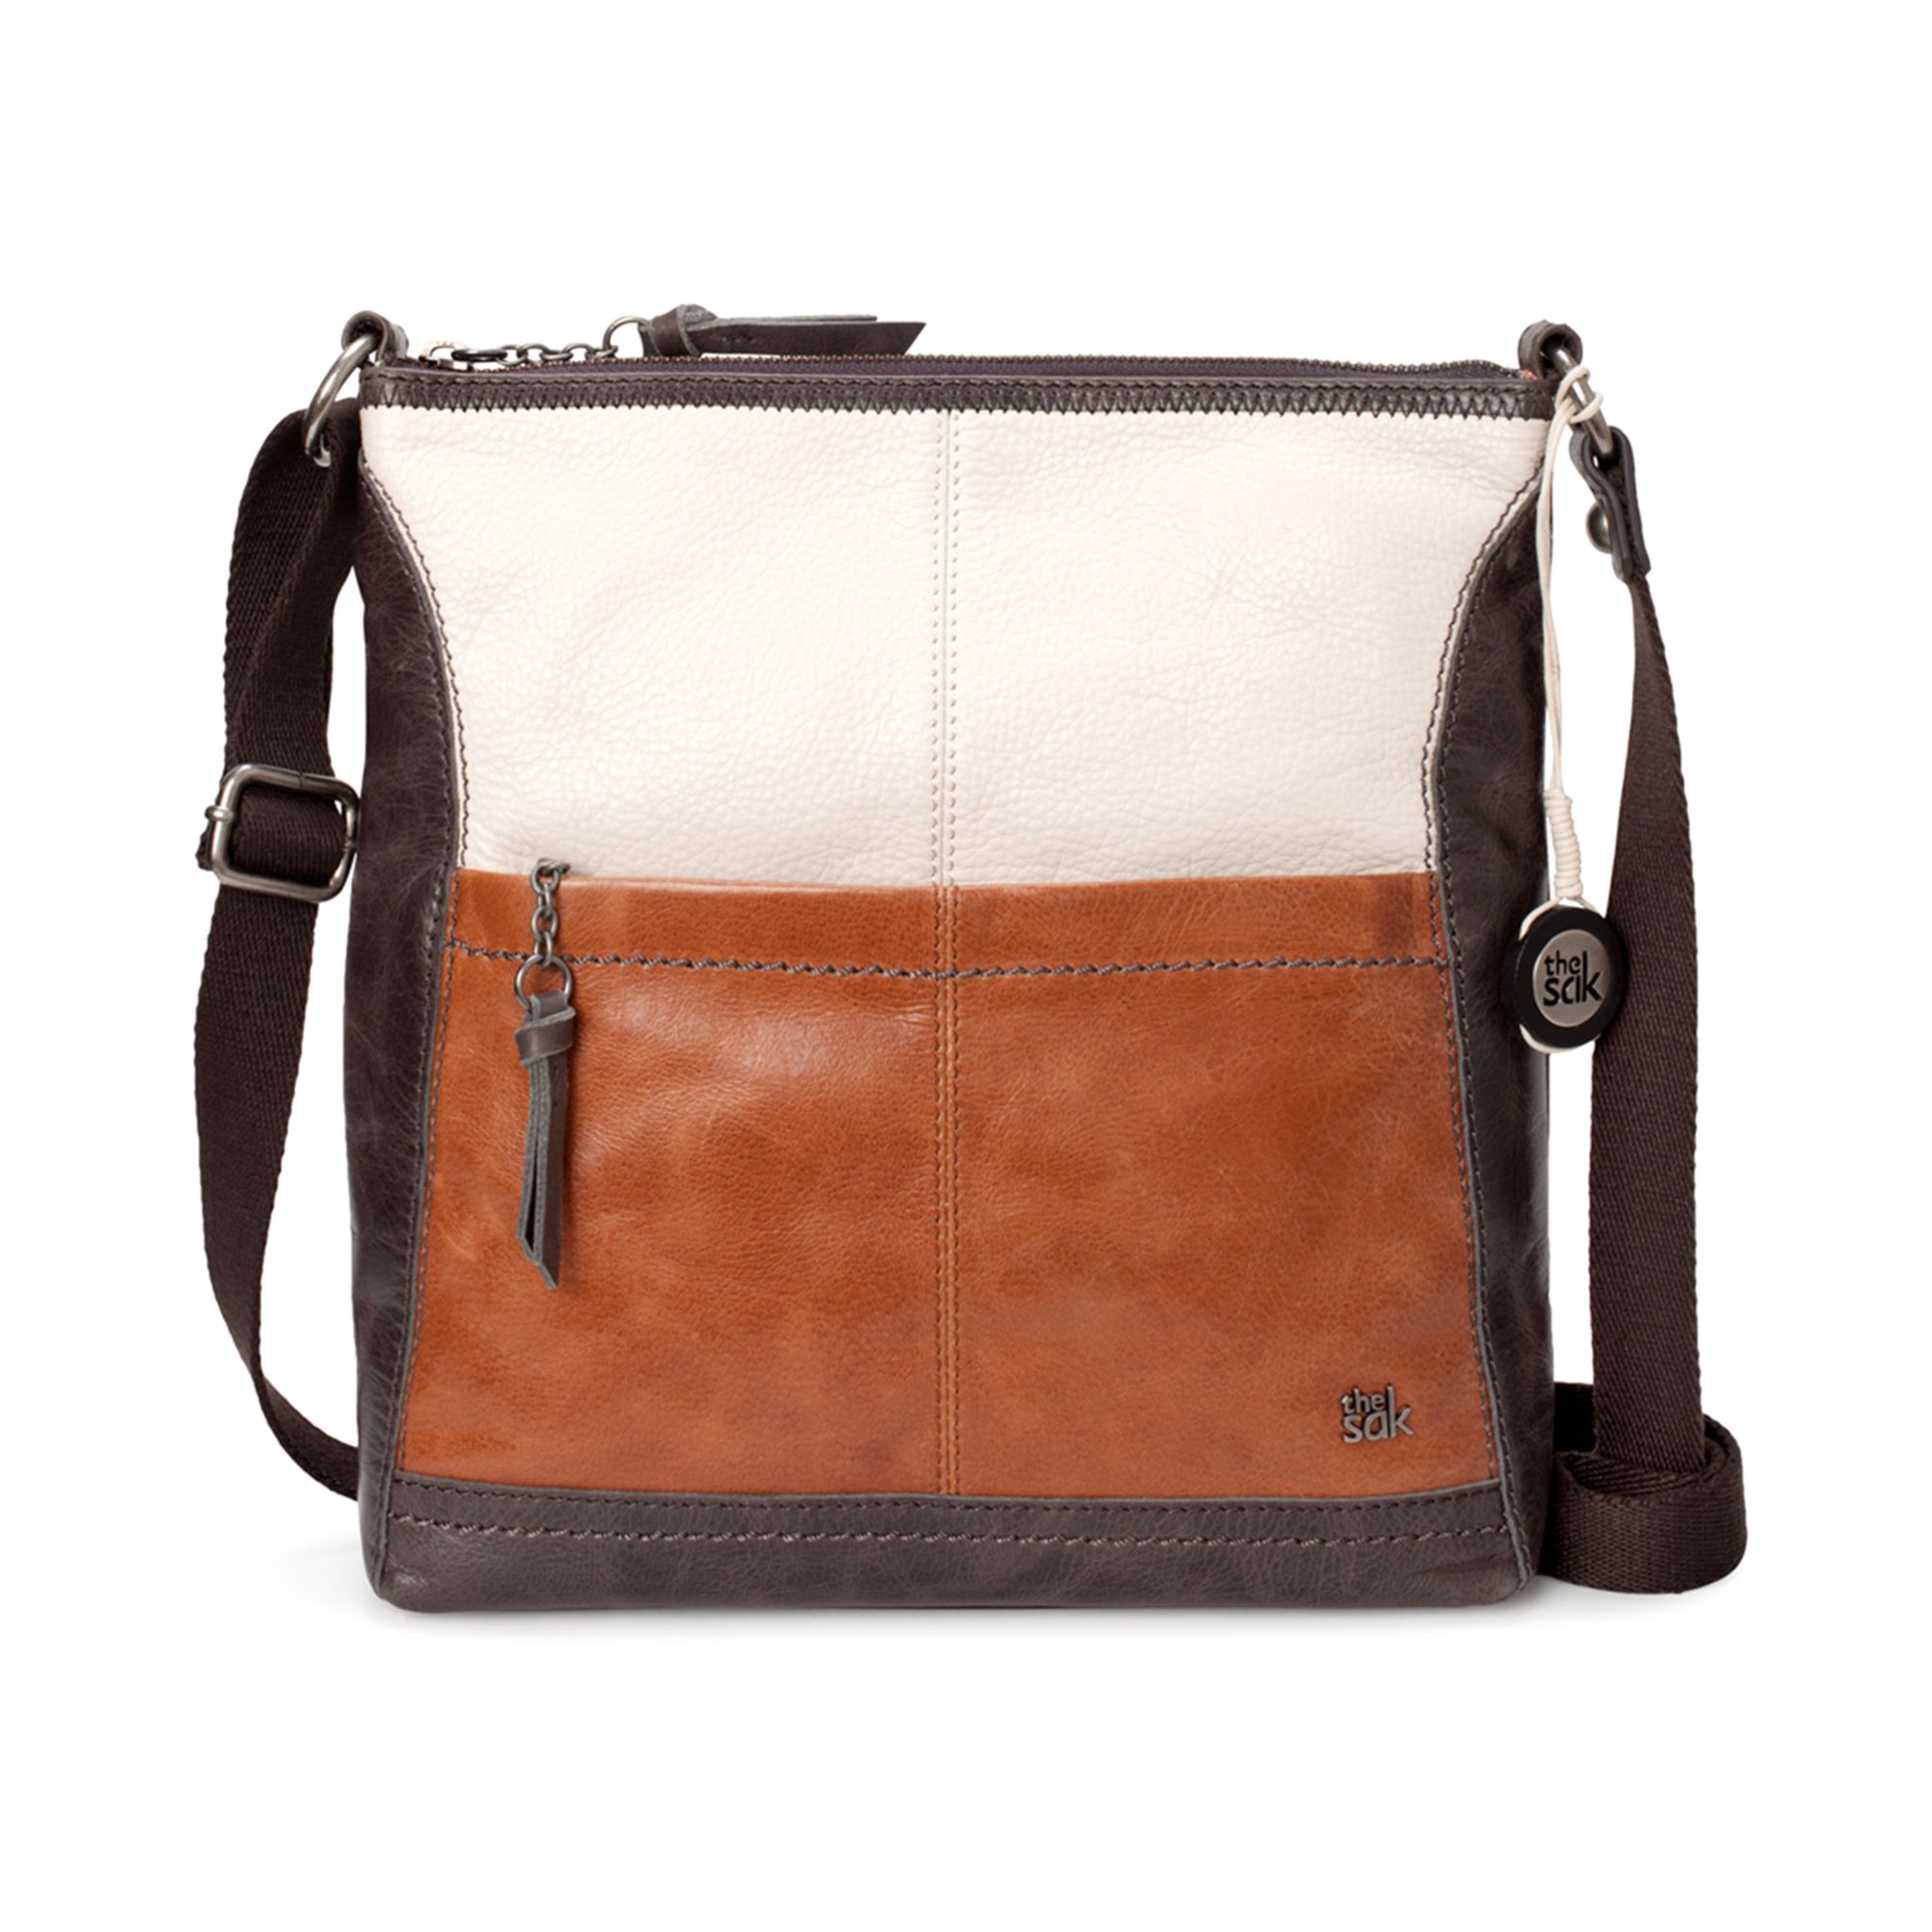 The Sak Iris Leather Crossbody Bag in Brown - Lyst